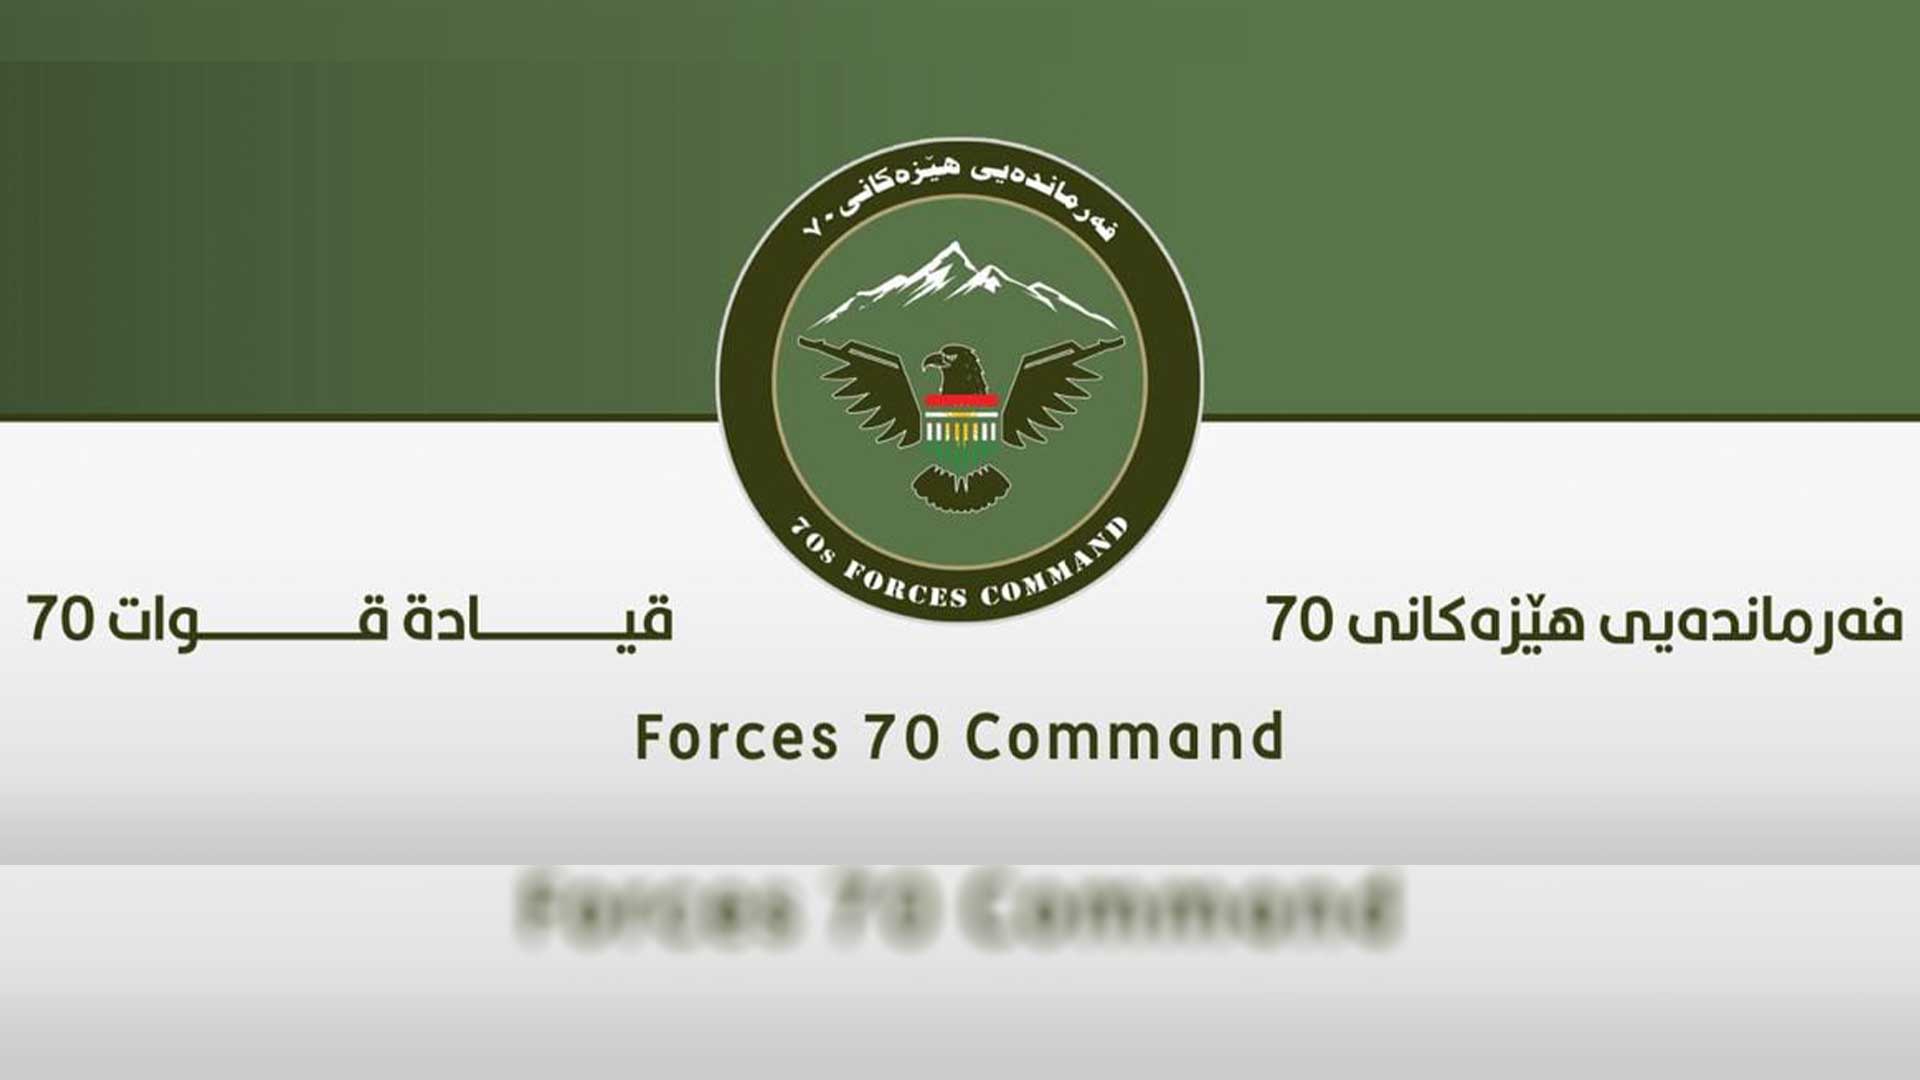  Force 70 Command's logo.